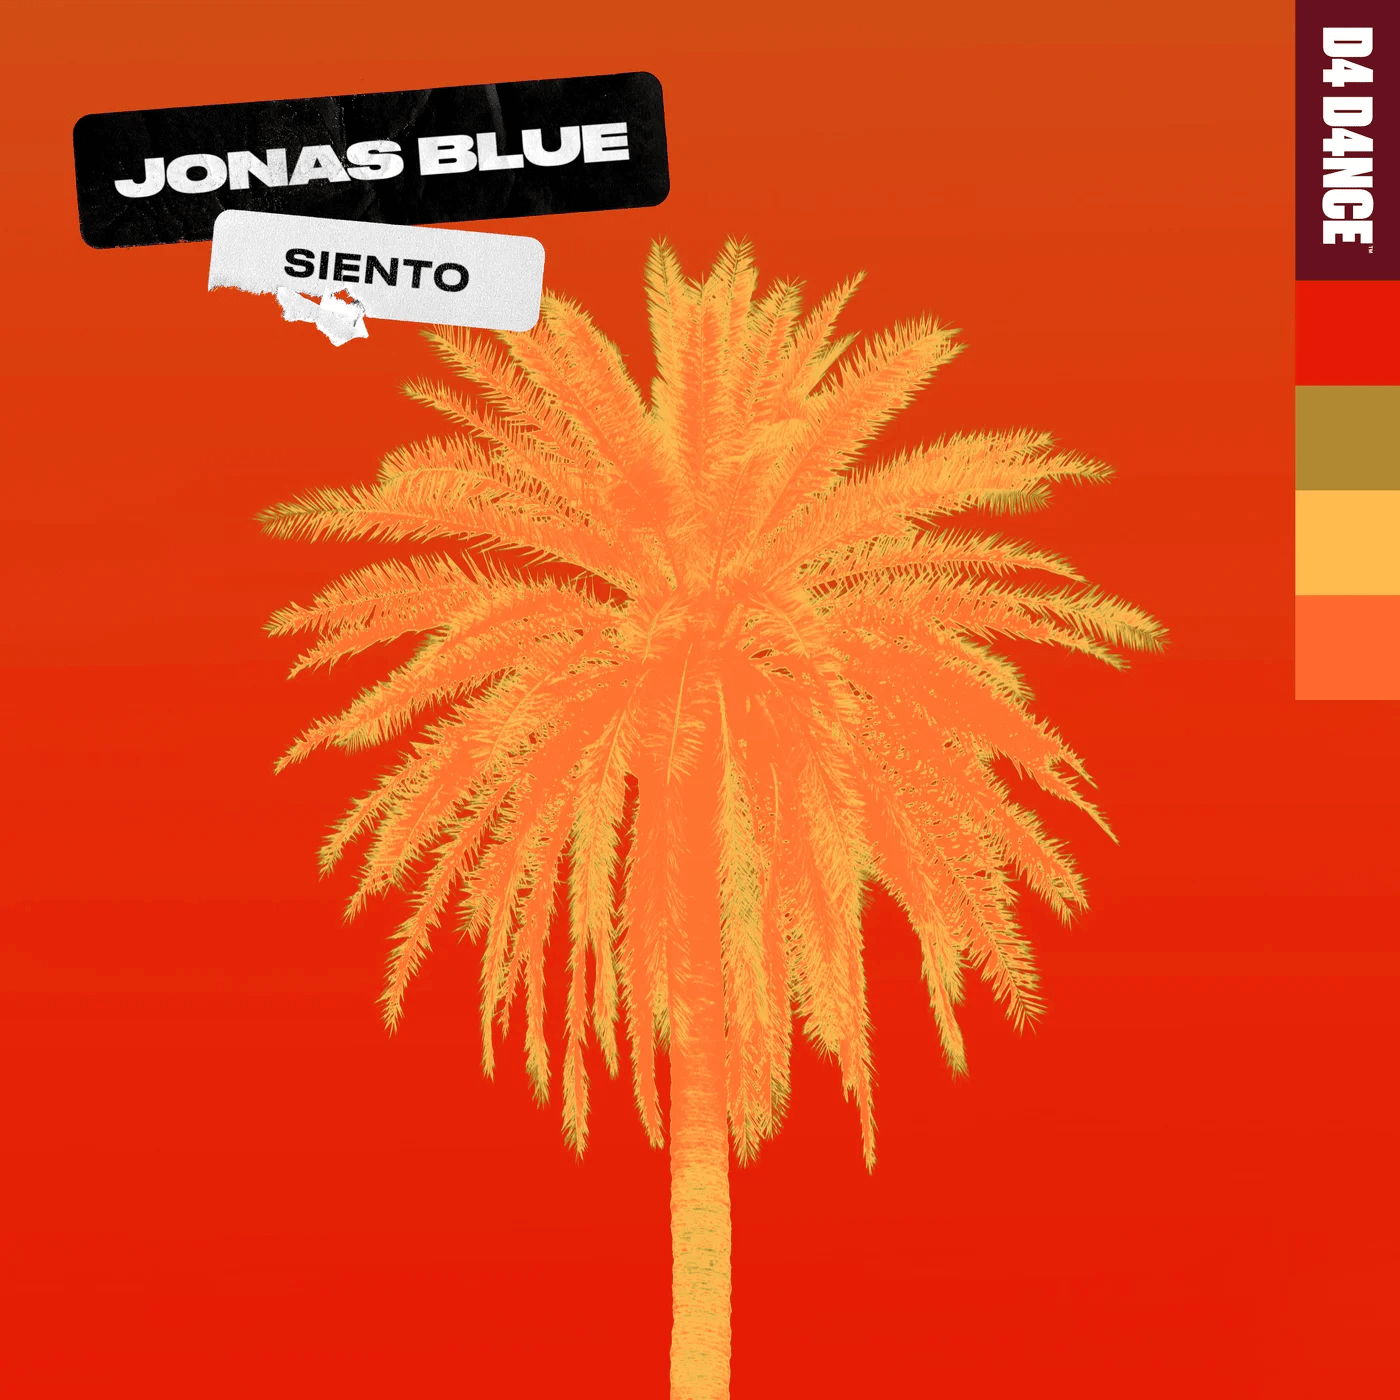 Jonas Blue — Siento cover artwork